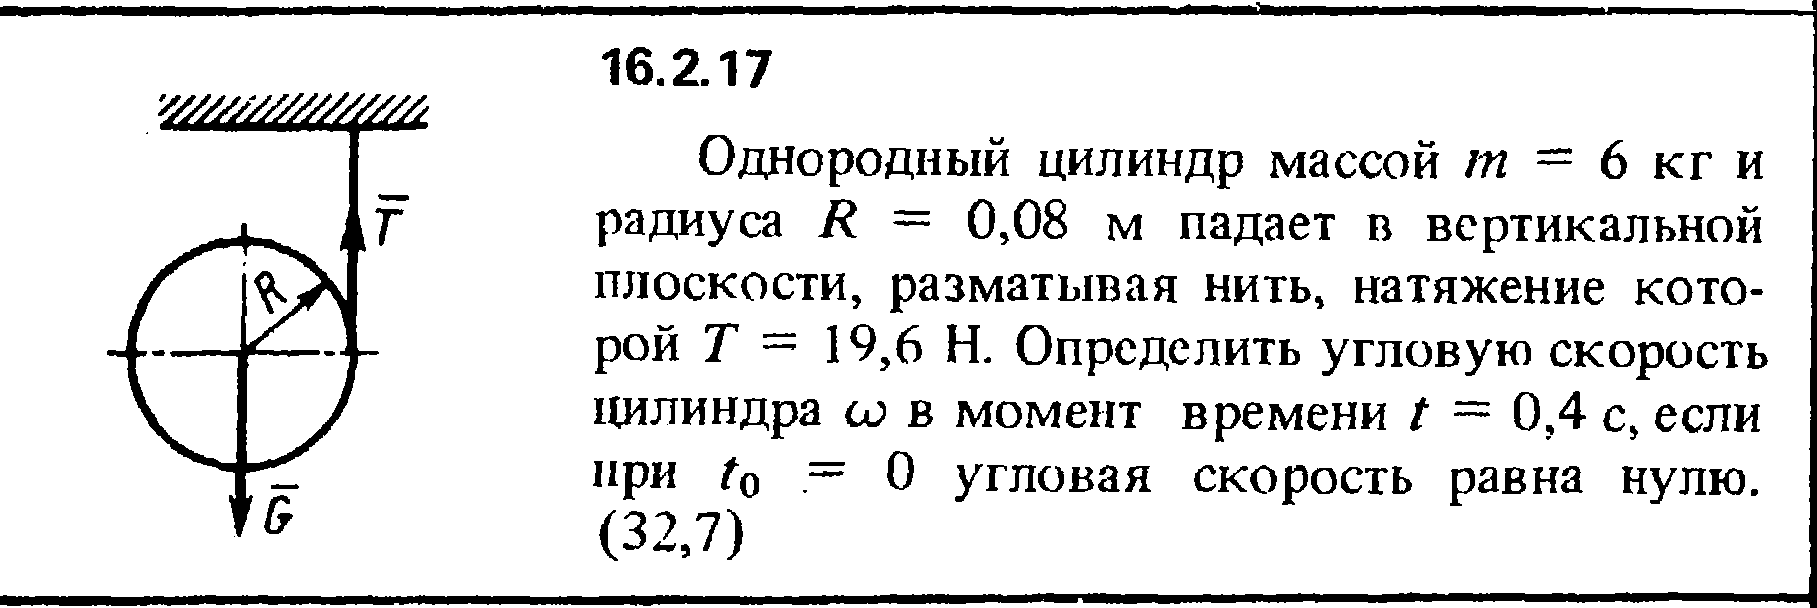 Решение задачи 16.2.17 из сборника Кепе О.Е. 1989 года